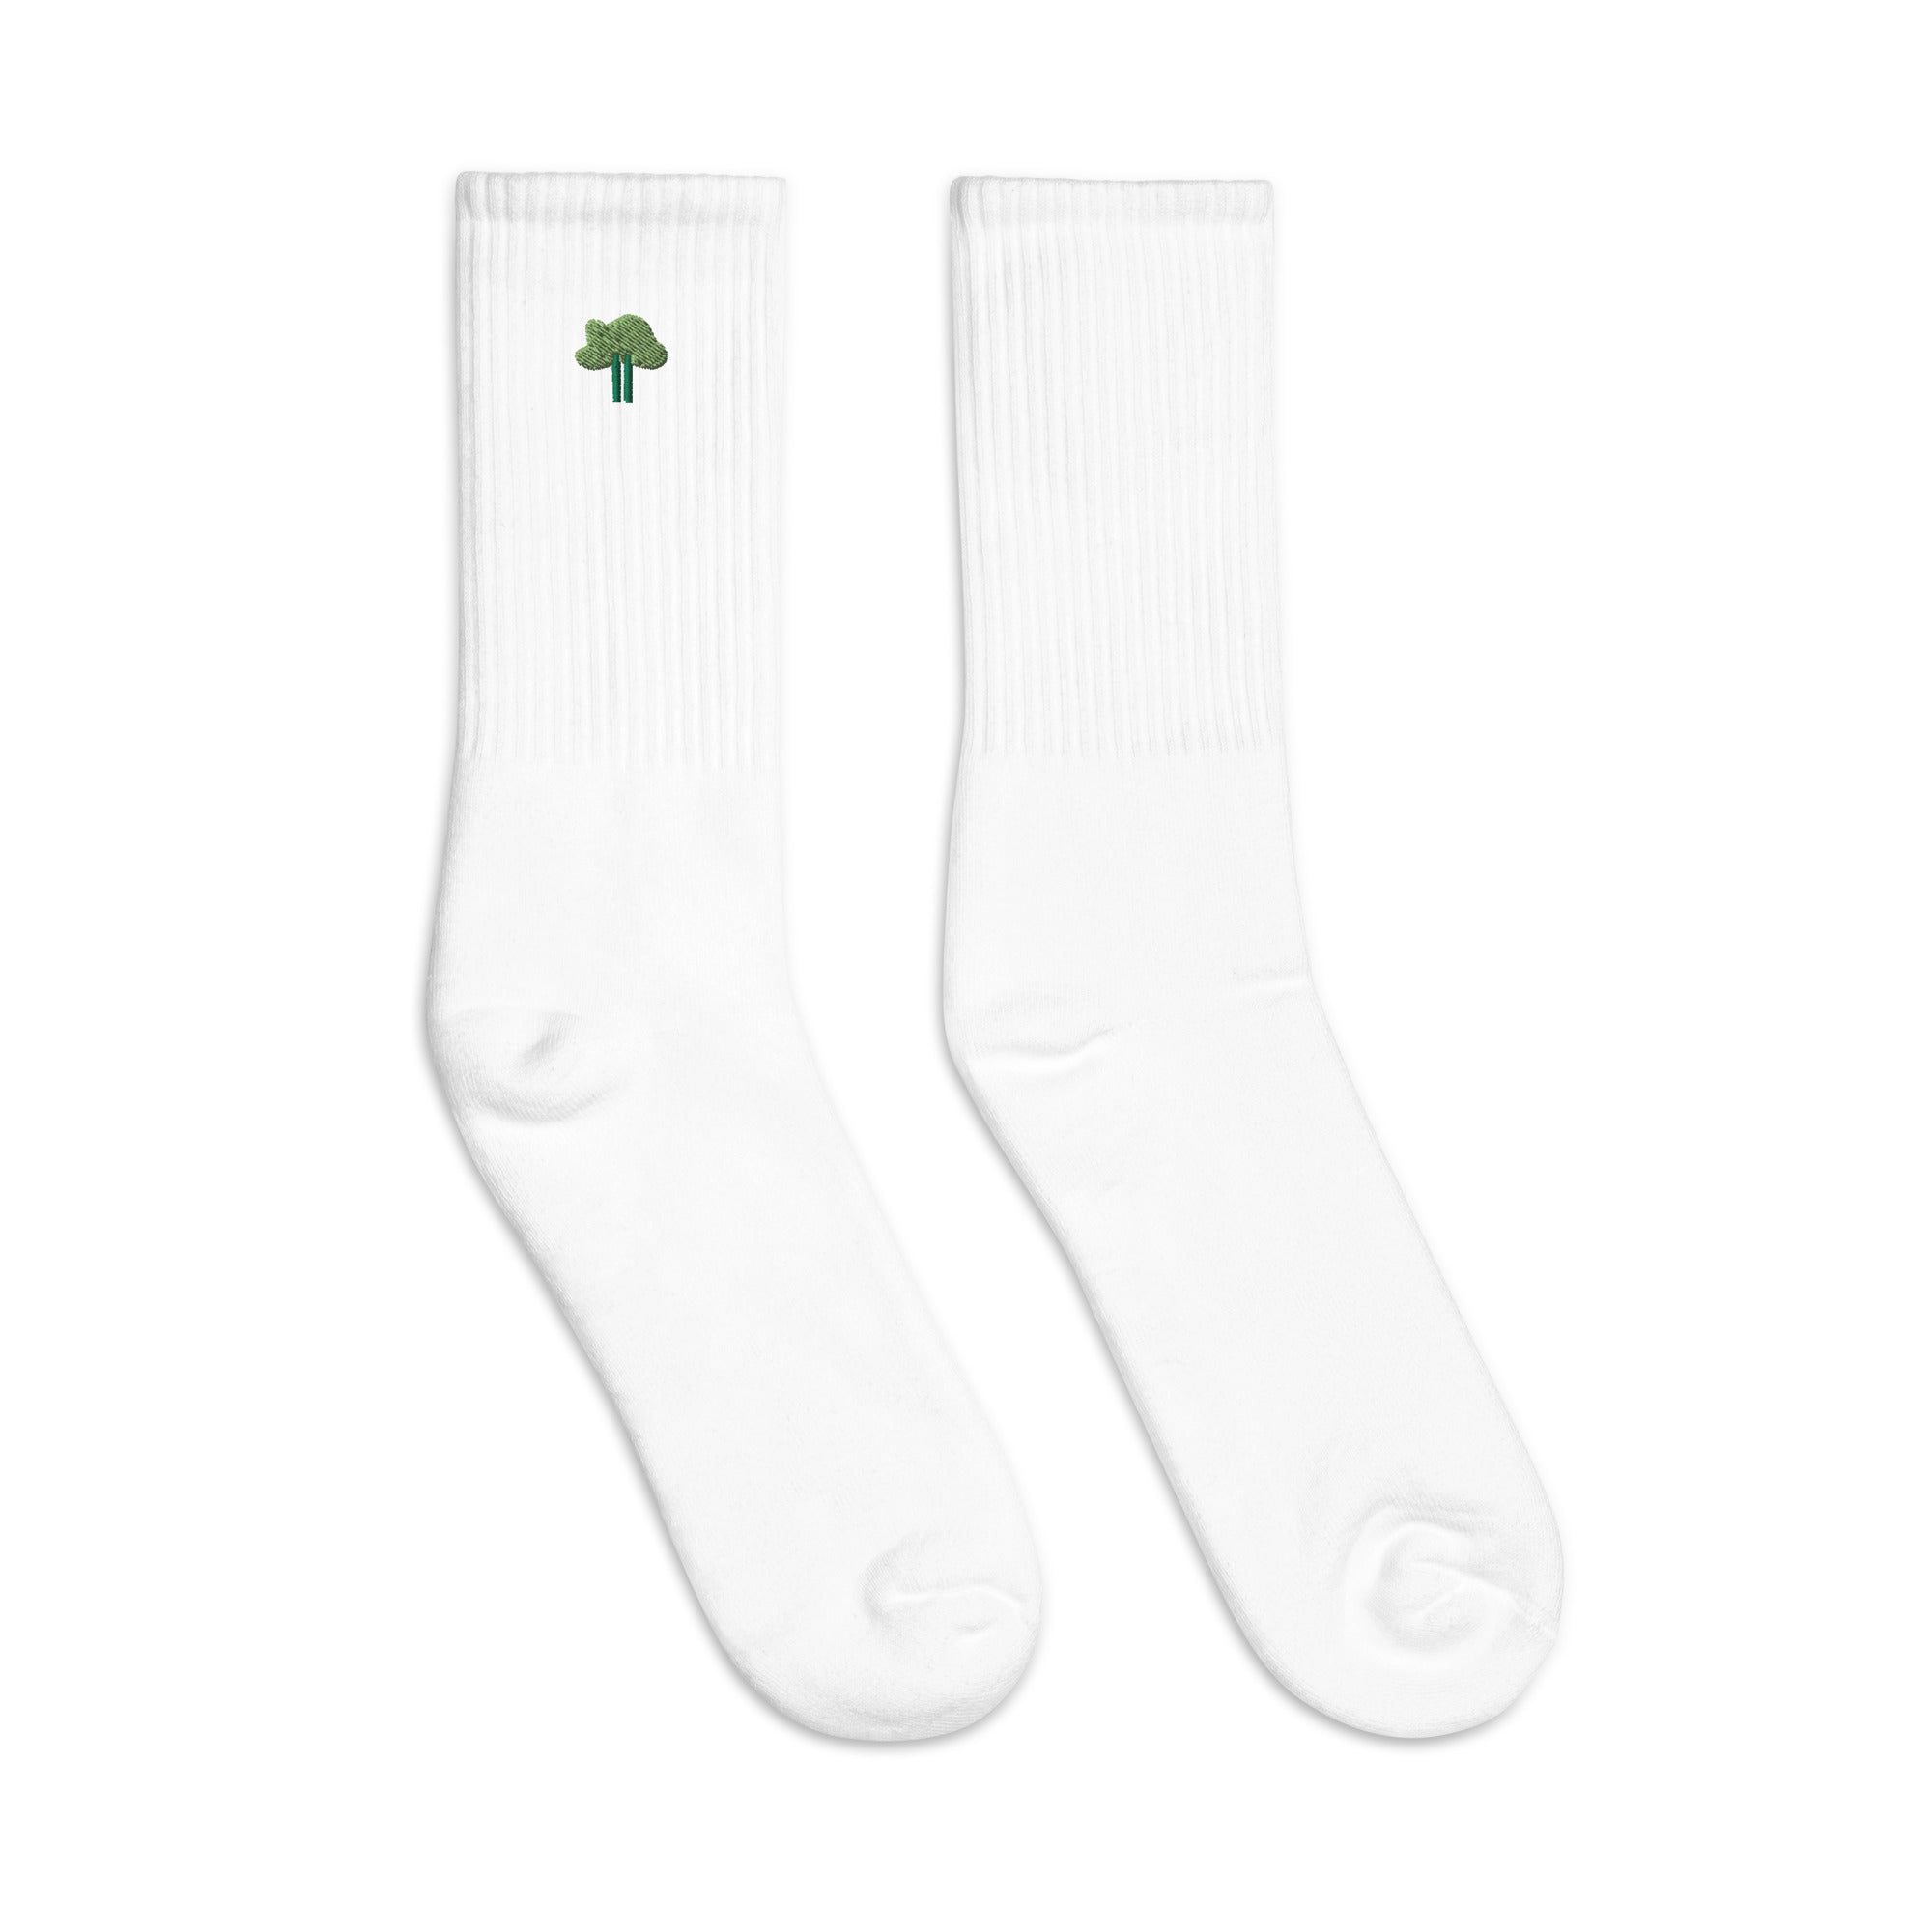 Arbolito Socks for Your Crocs